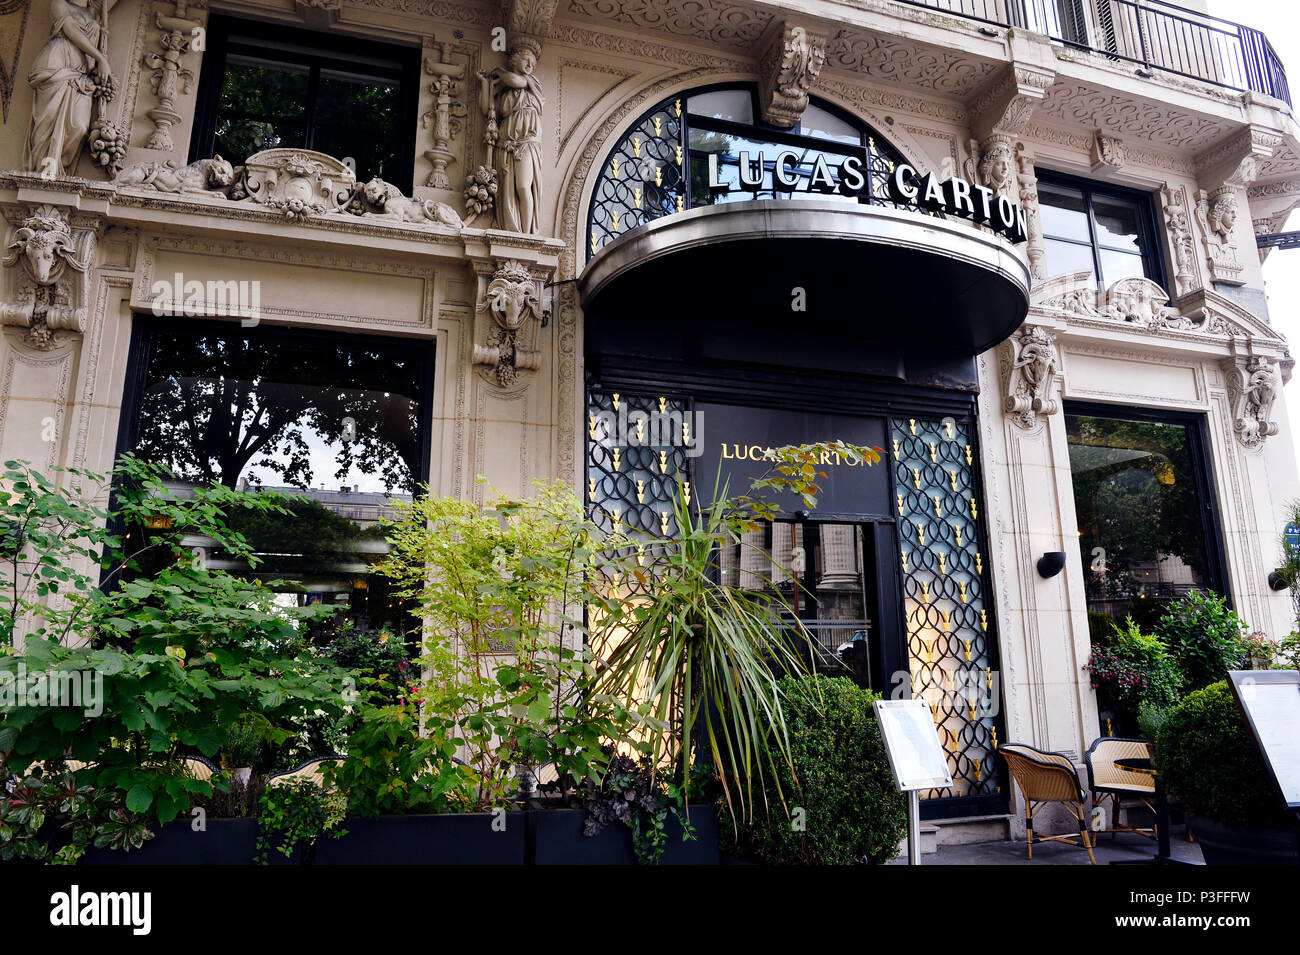 Restaurant Lucas Carton - Paris - France Photo Stock - Alamy